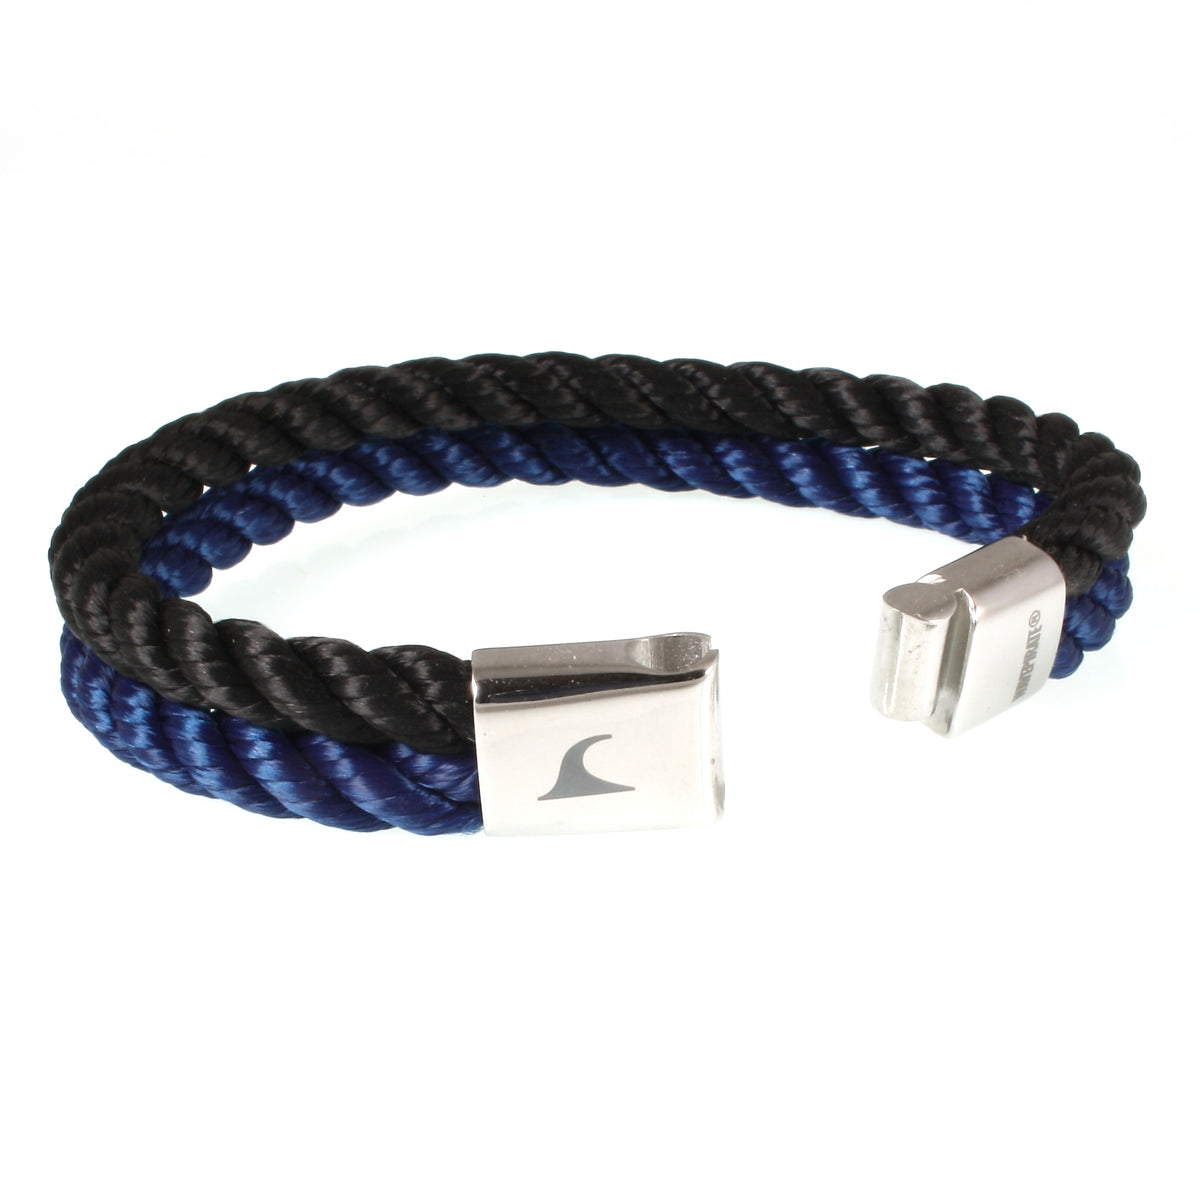 Herren-Segeltau-Armband-Tarifa-schwarz-koenigsblau-geflochten-Kordel-Edelstahlverschluss-offen-wavepirate-shop-k